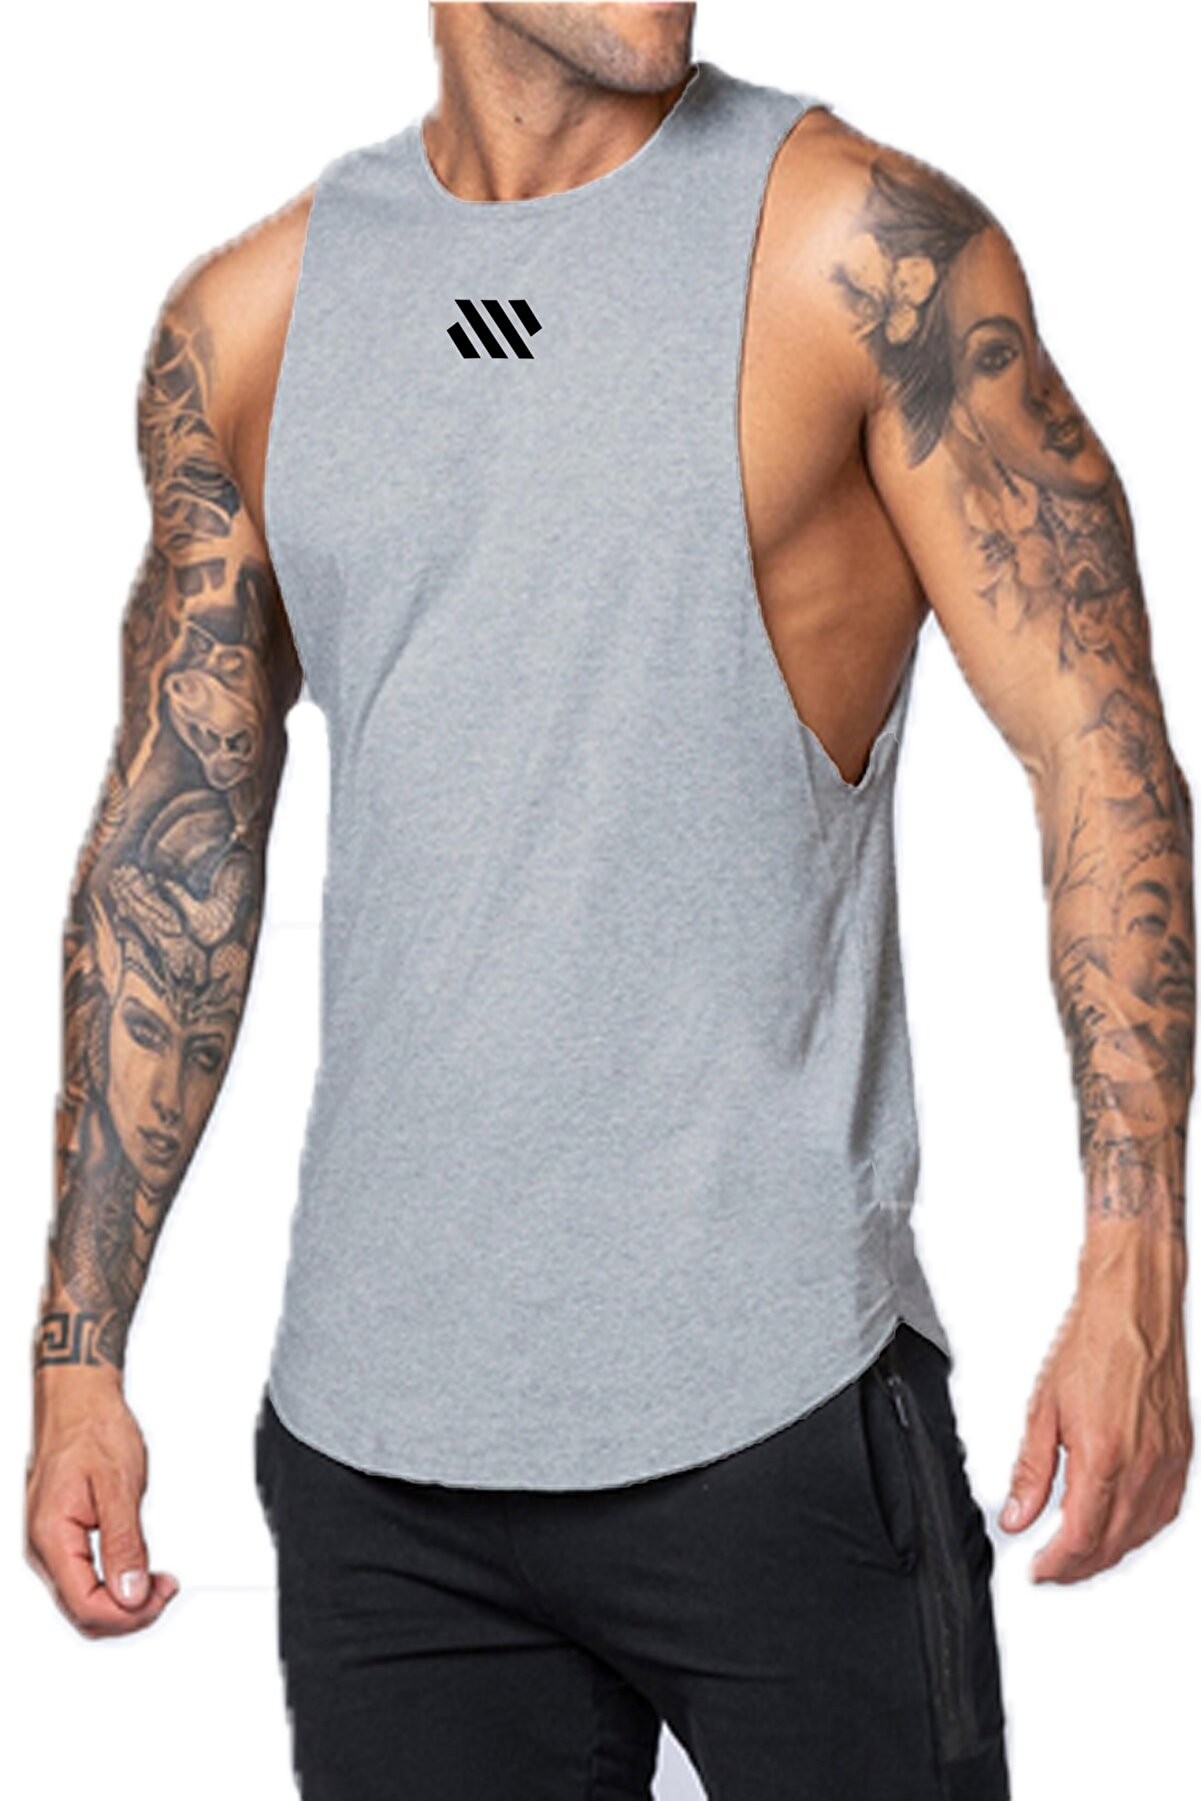 Ghassy Co. Erkek Dry Fit Gym Workout Stringer Fitness Spor Atlet Tshirt GYM-105 - AÇIK GRİ